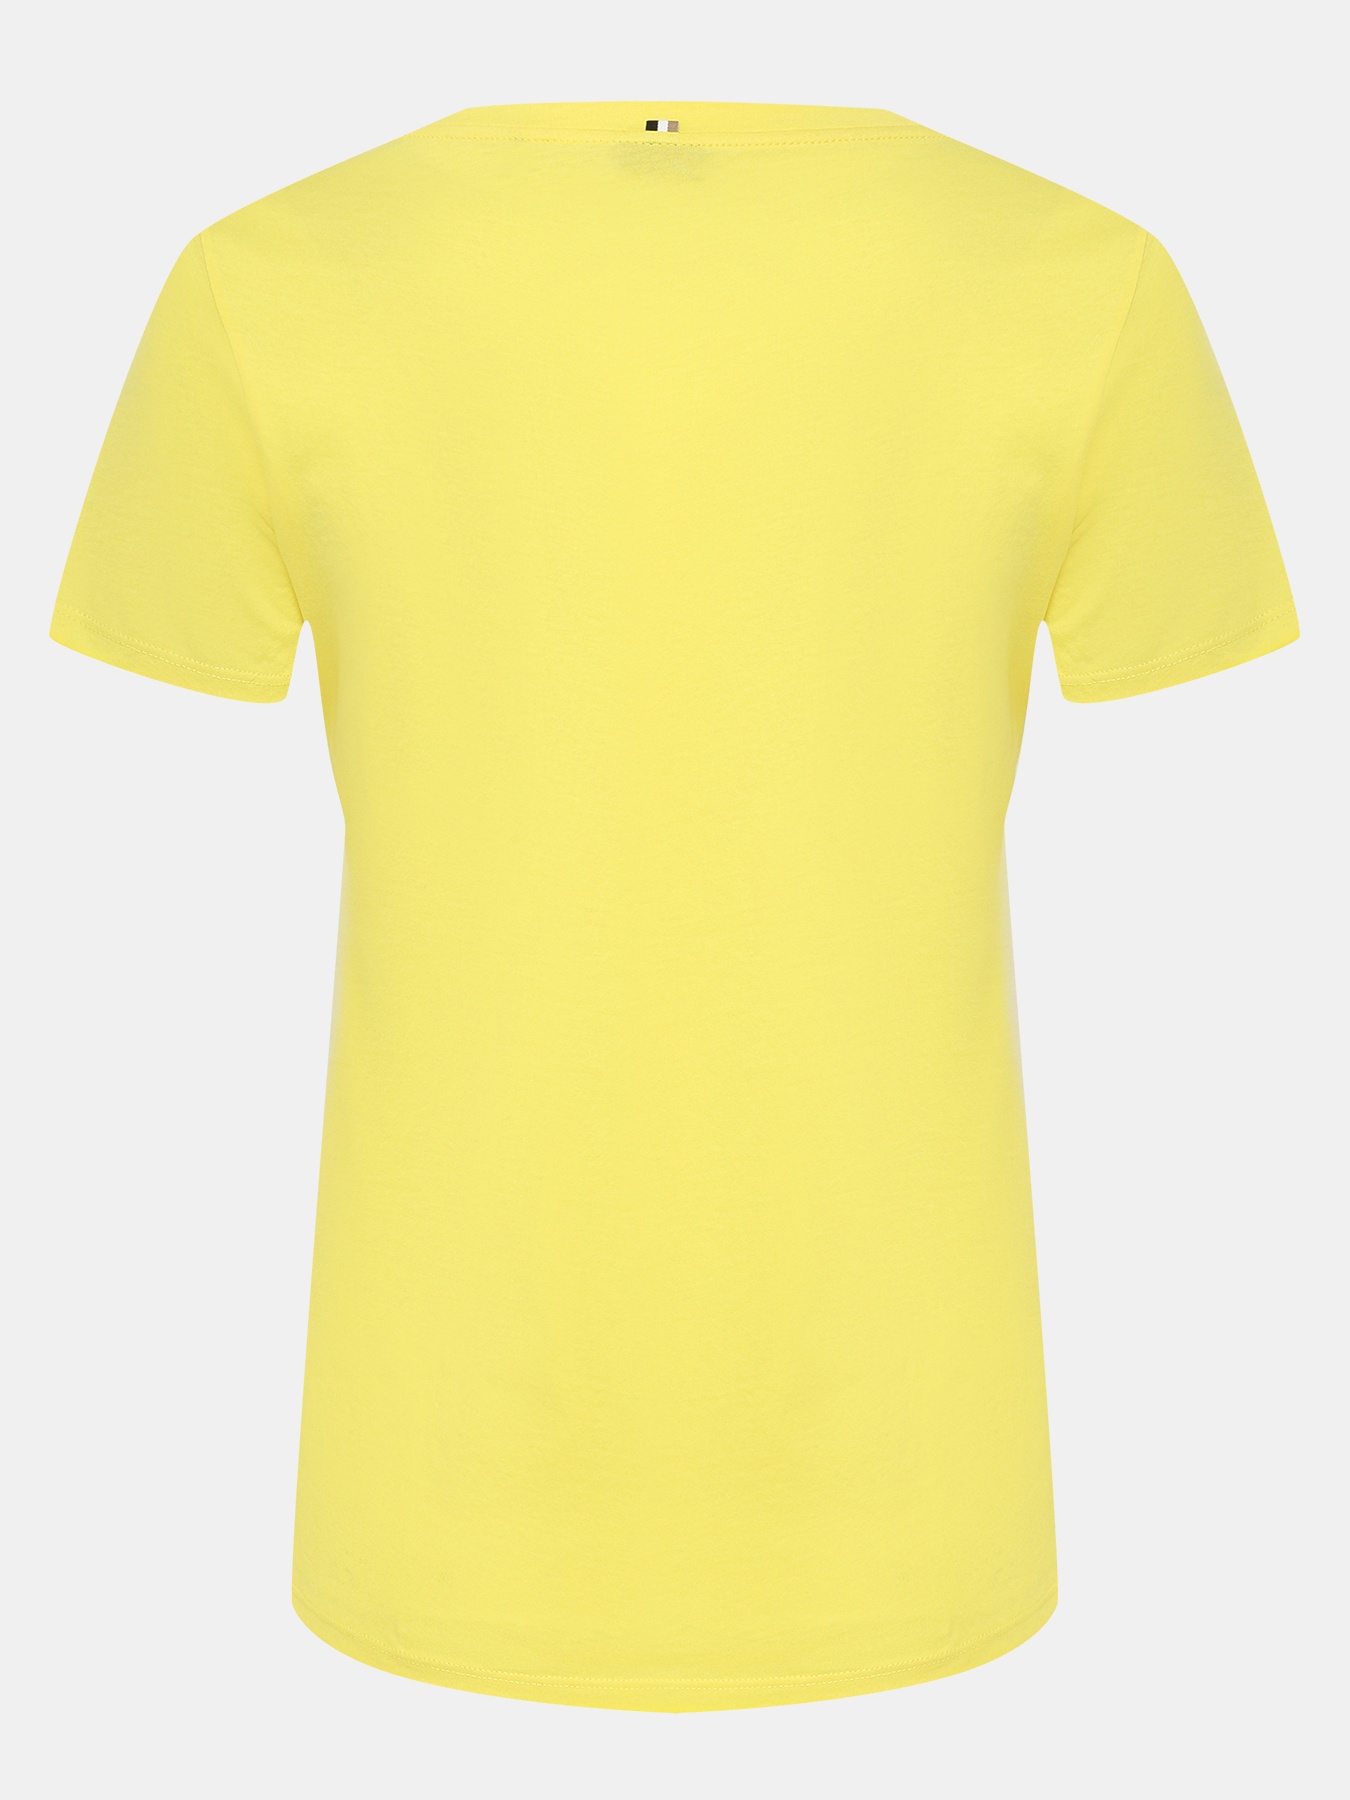 Футболка Elogo BOSS 434152-043, цвет желтый, размер 44-46 - фото 3